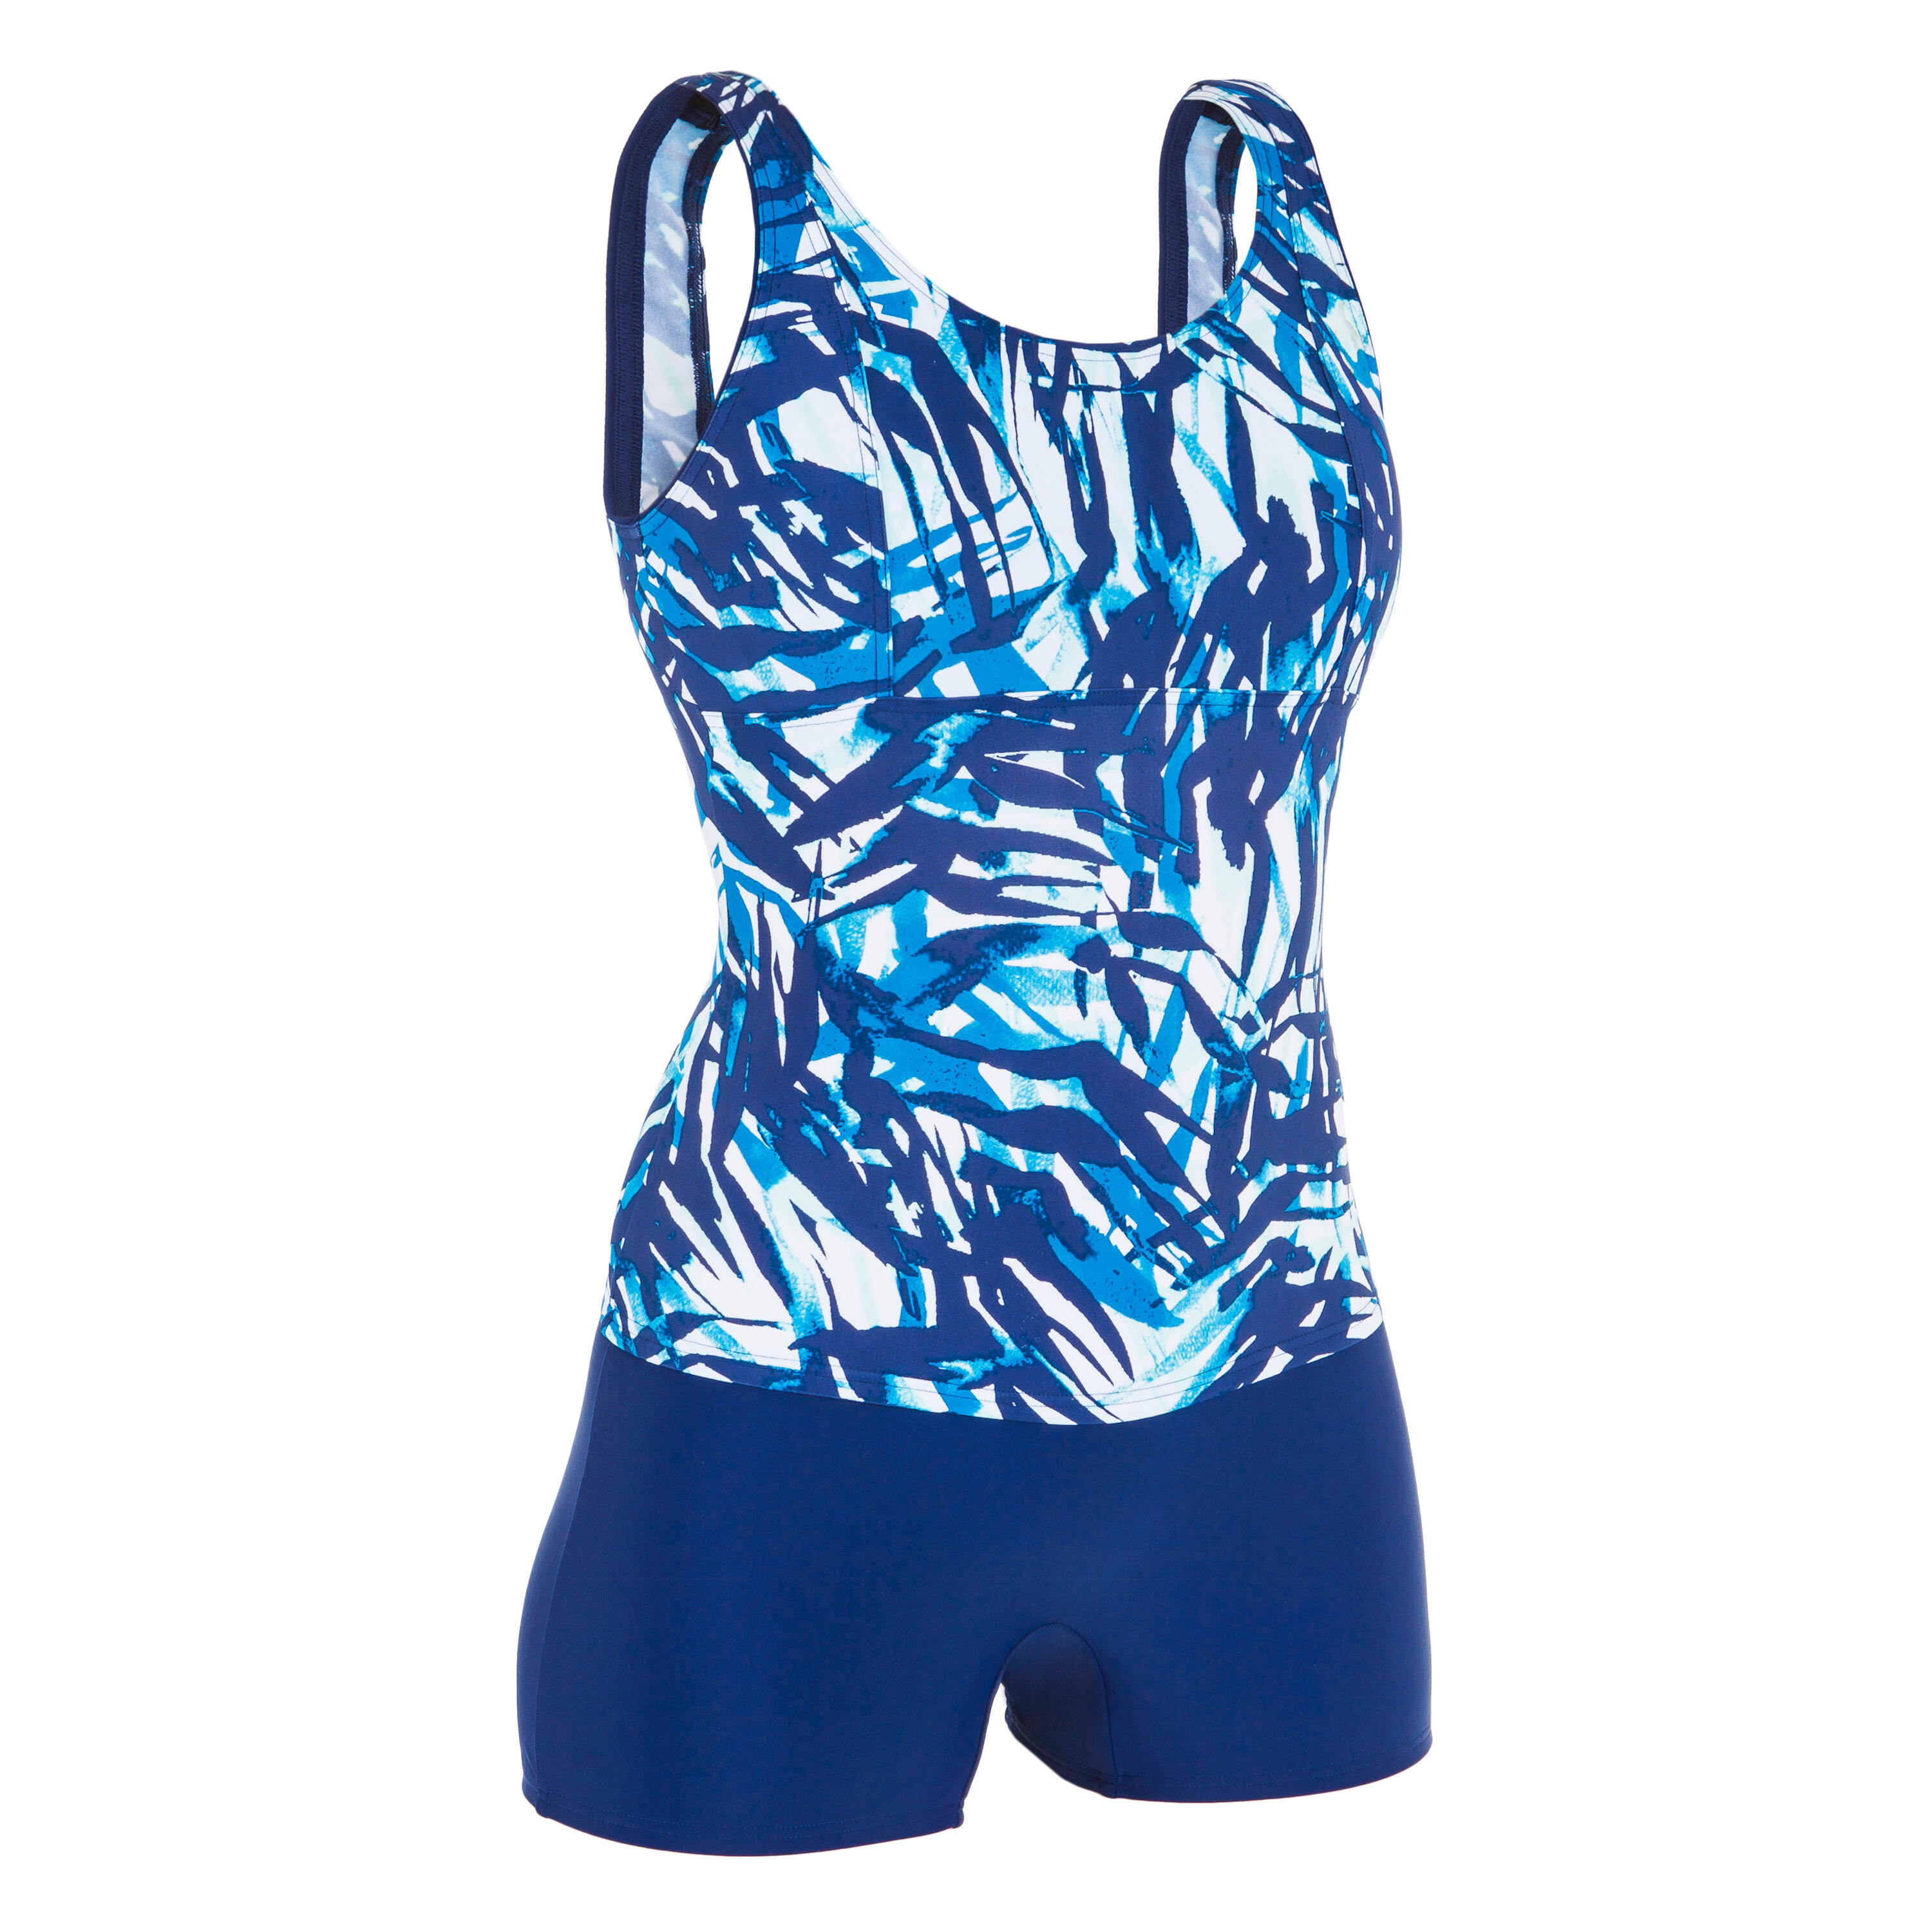 Women's 1-piece aquafitness shorty swimsuit Doli Boo - blue 7/7